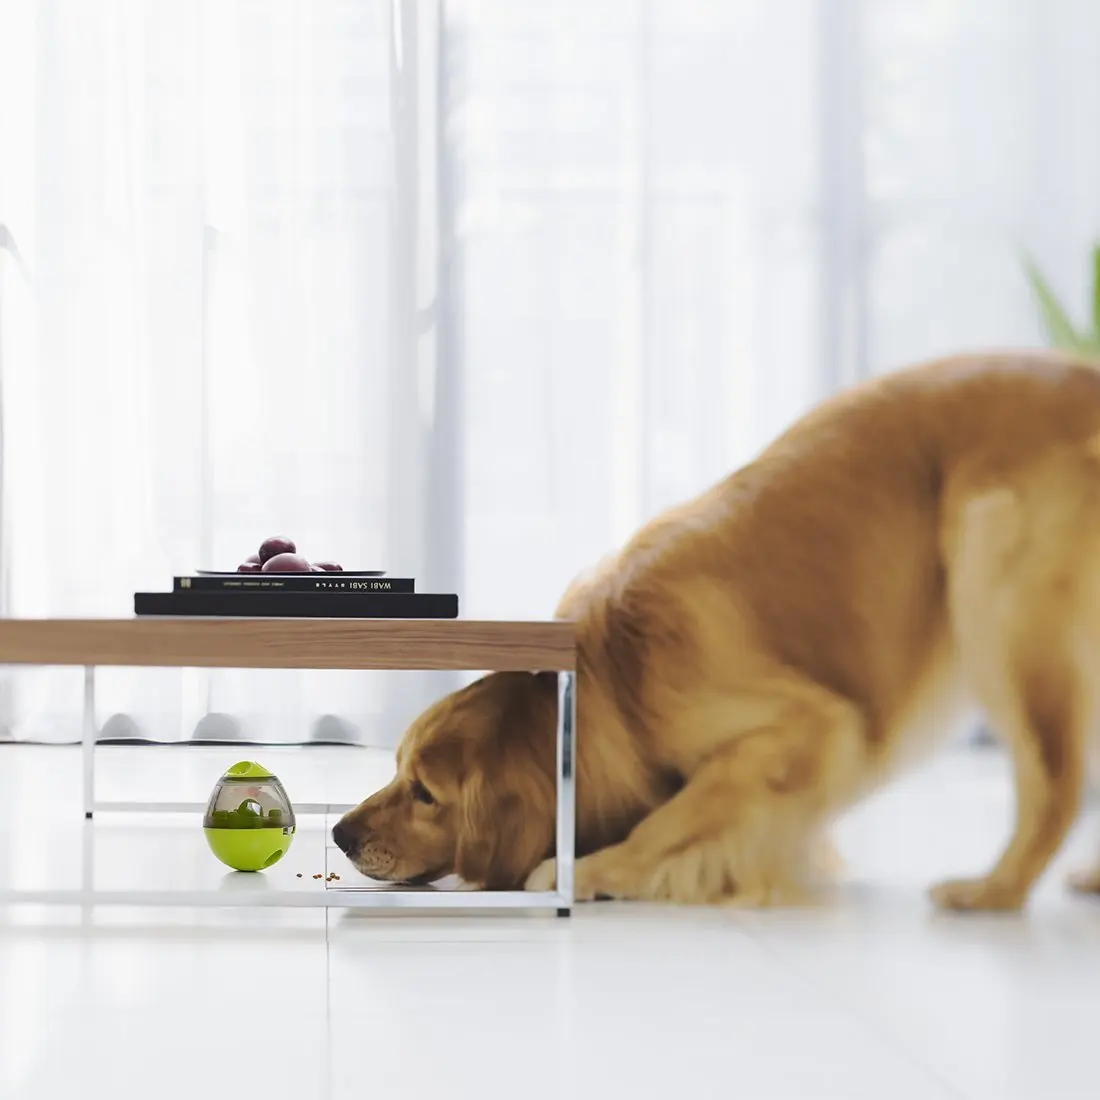 https://ae01.alicdn.com/kf/S5e0e7940cc7e4709ad1eaec0d092470f5/Dog-Tumbler-Feeding-Toys-Pets-IQ-Treat-Ball-Interactive-Food-Toys-For-Dogs-Puppy-Training-Balls.jpg